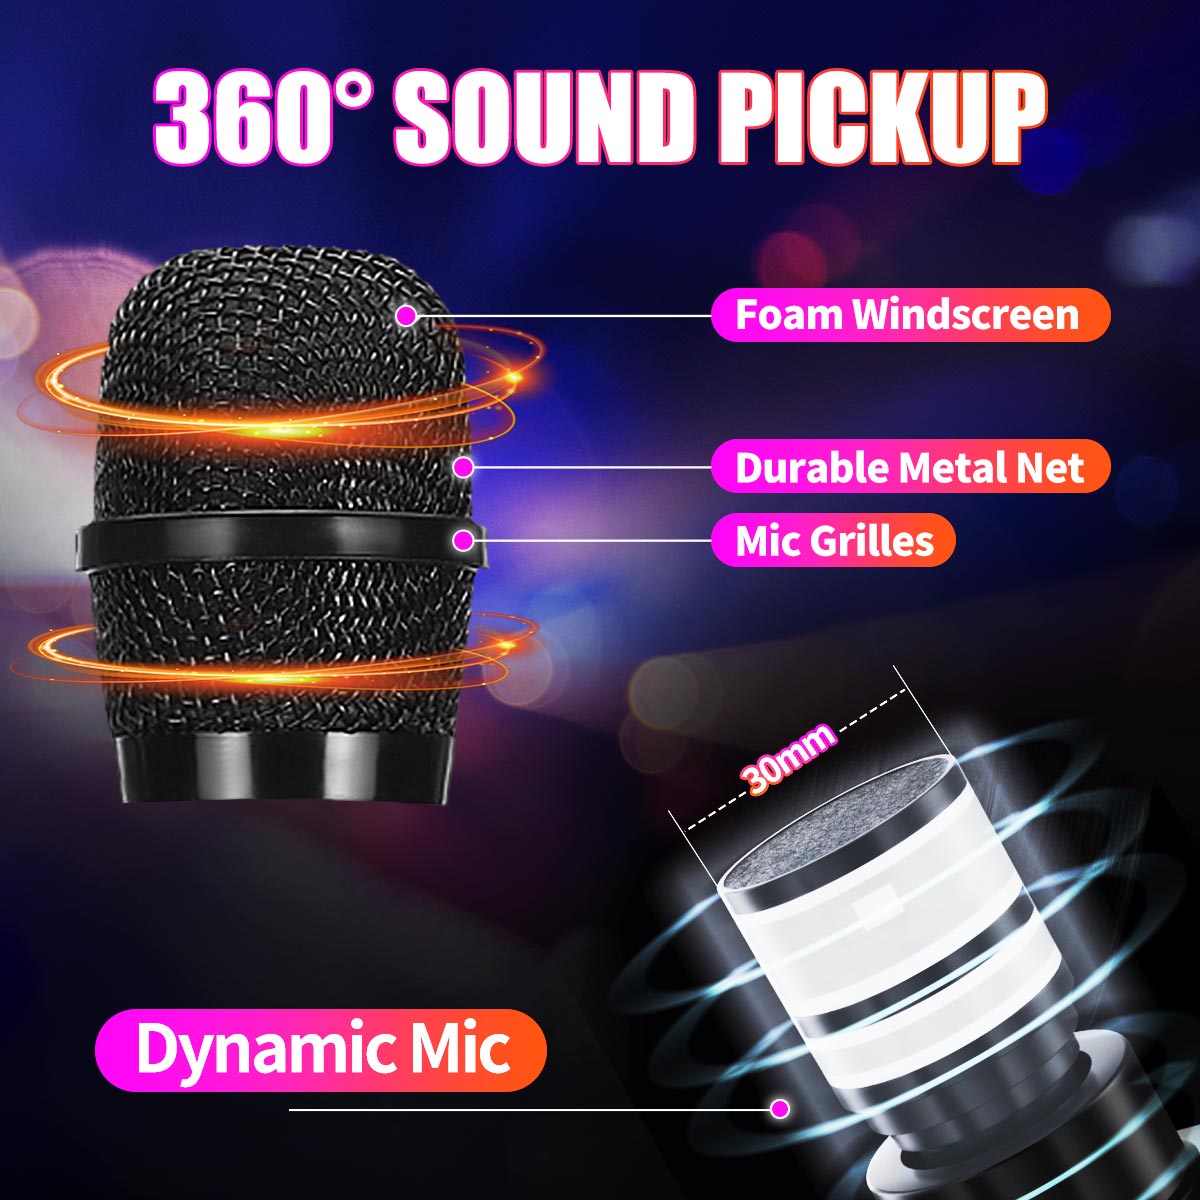 Bakeey M10 Wireless bluetooth Microphone 13W*2 HIFI Stereo Speaker TF Card AUX-In Luminous 2600mAh Karaoke Mic Recorder KTV Singing Player